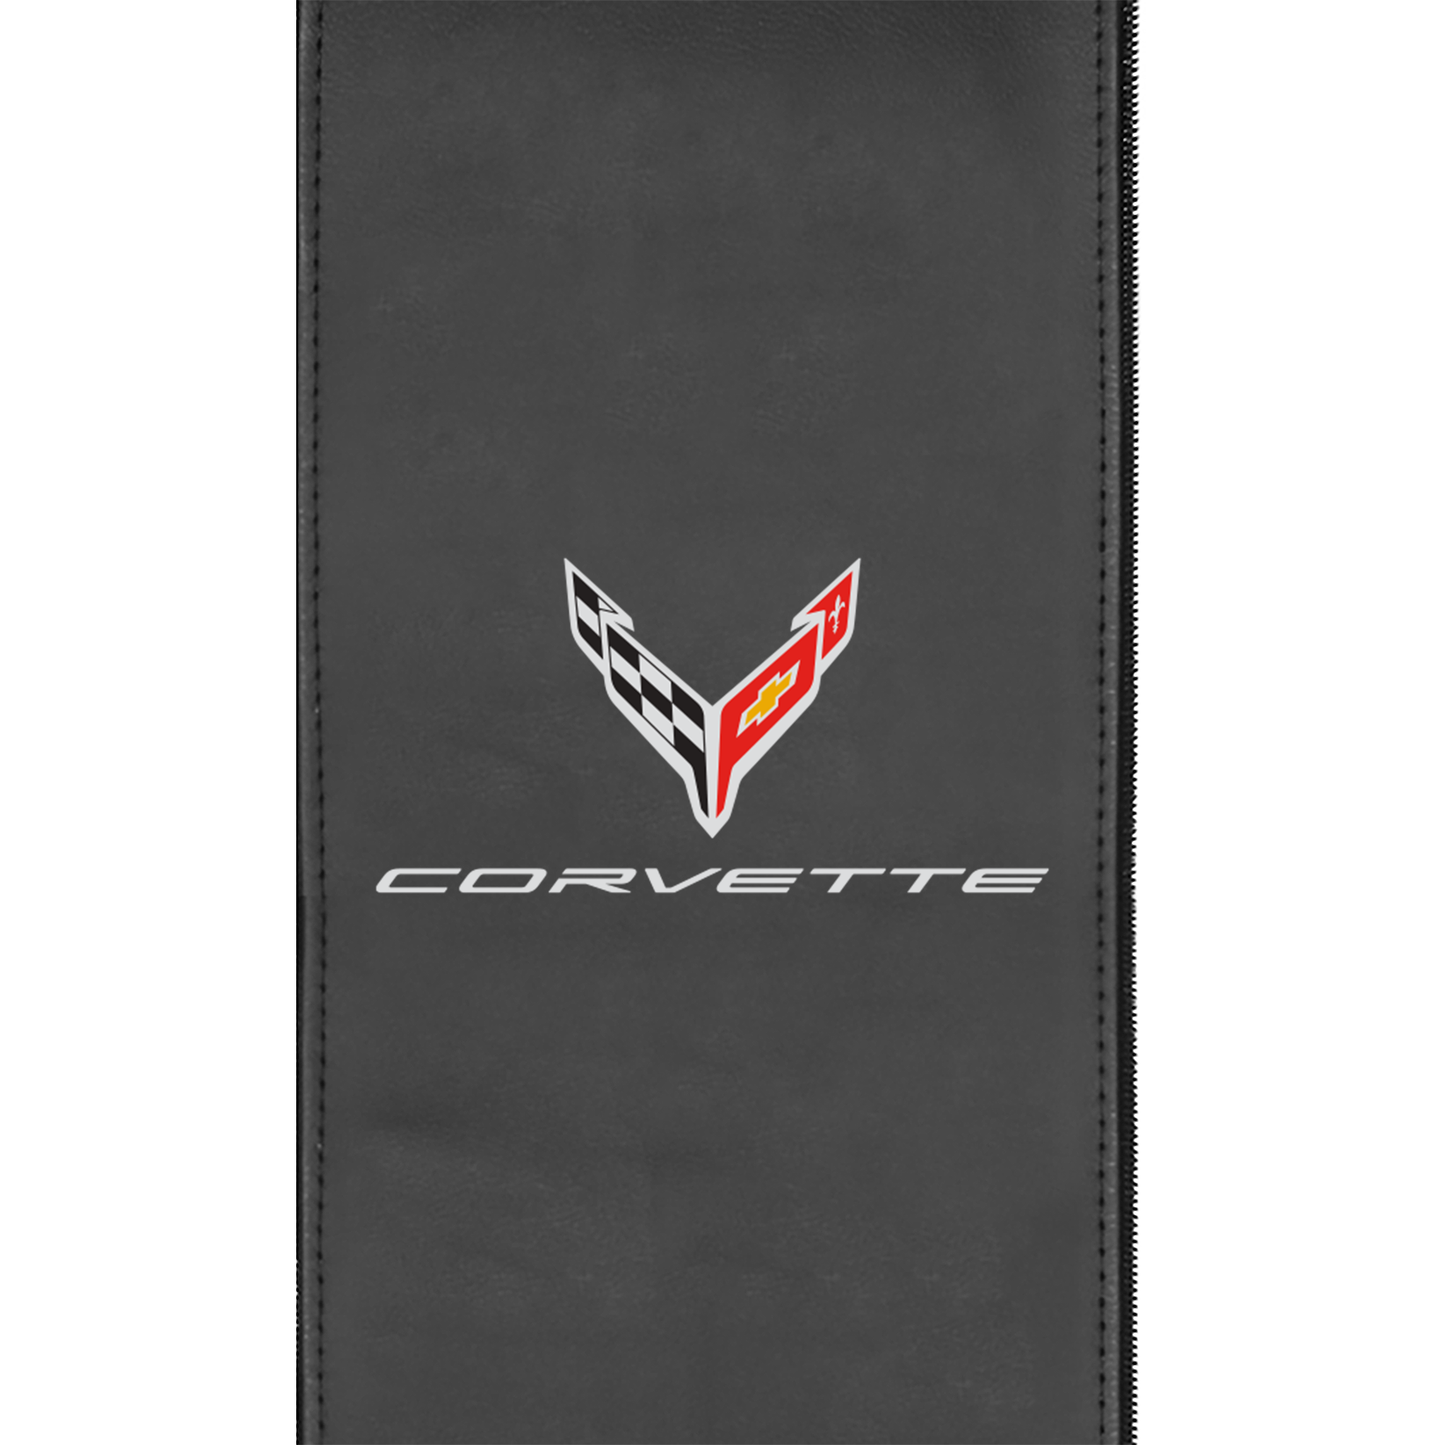 Silver Club Chair with Corvette Signature Logo